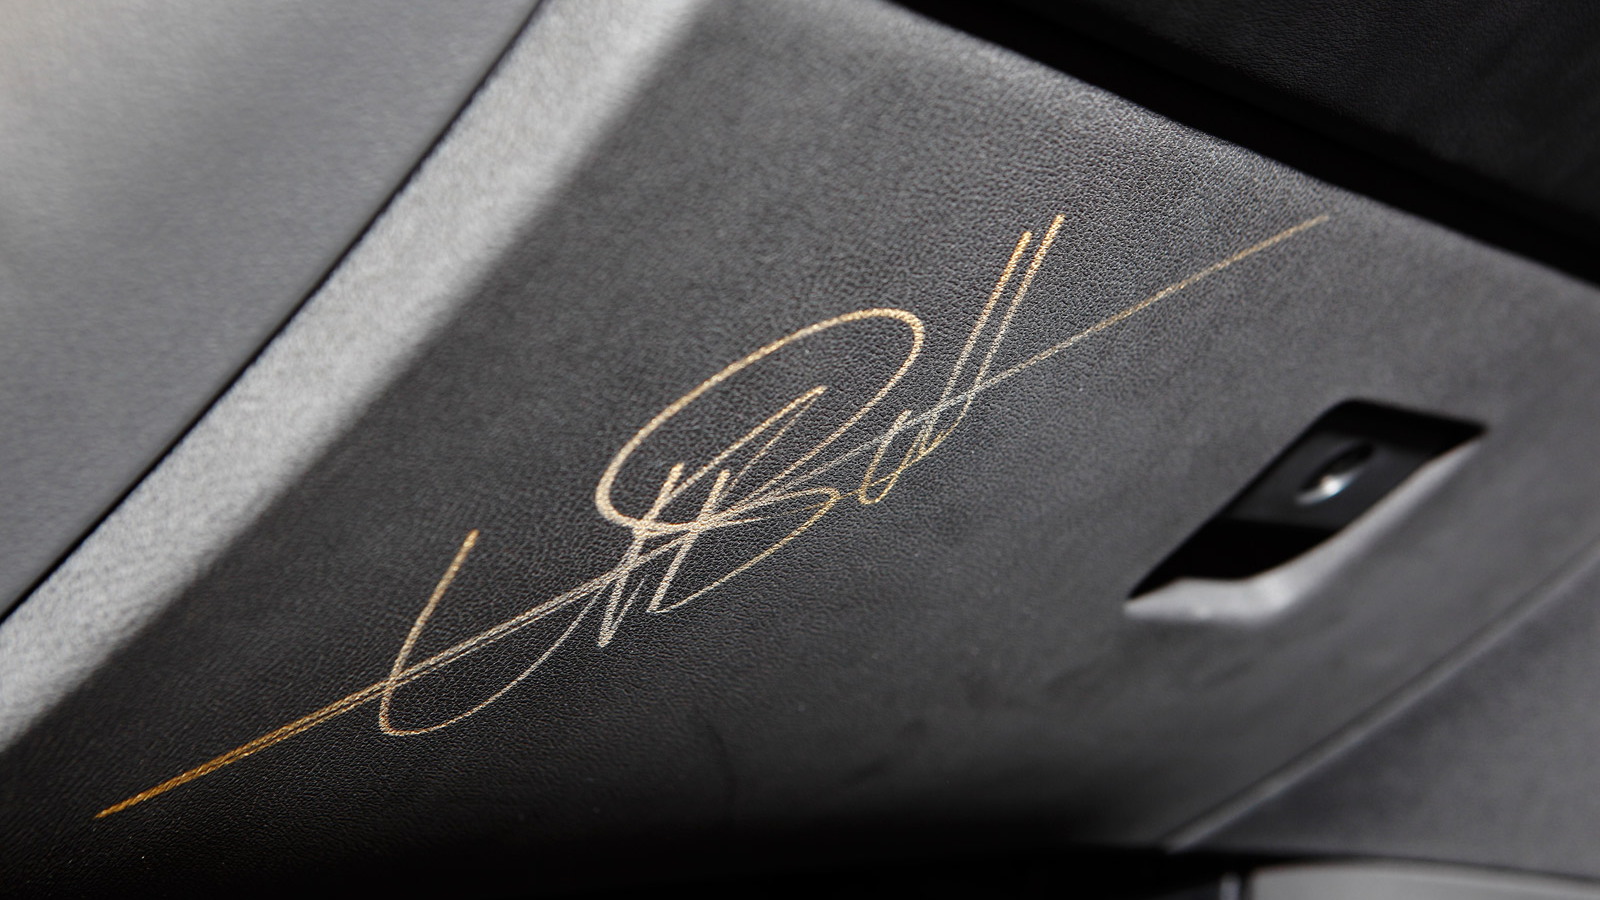 2014 Nissan GT-R ‘Bolt Gold’ edition